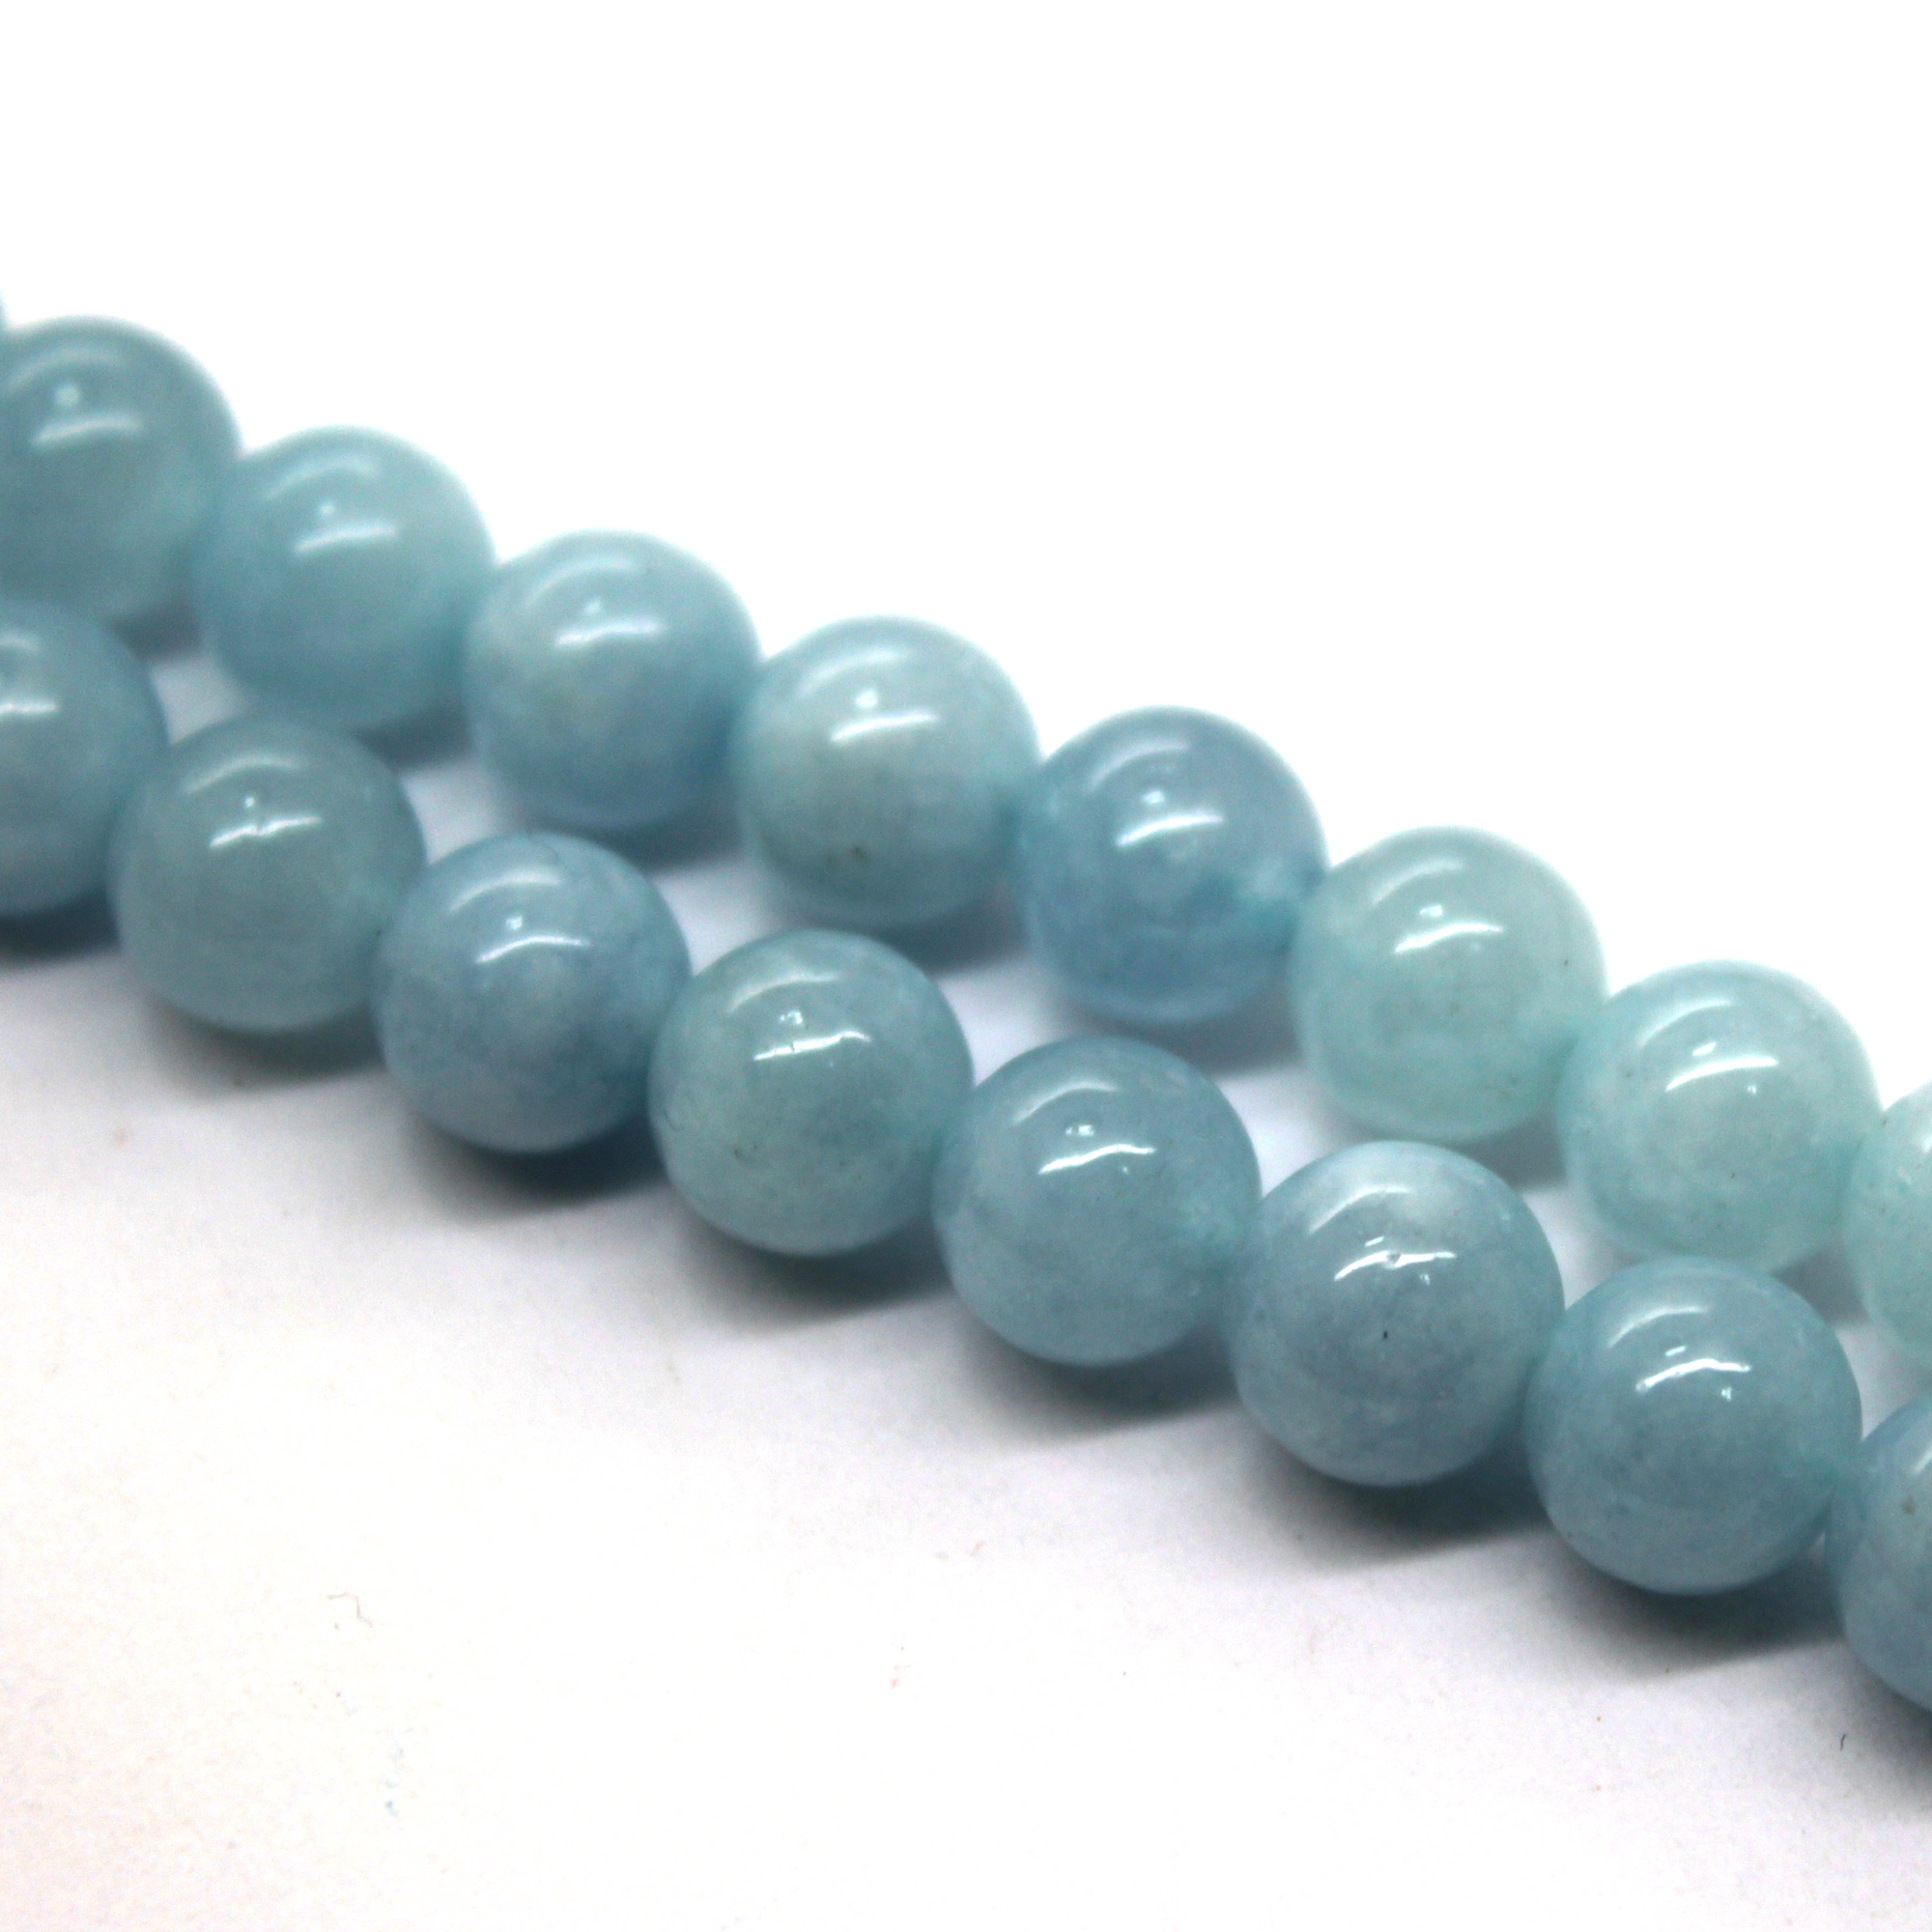 Aquamarine (HQ), Semi-Precious Stone, 8mm, 48 pcs per strand - Butterfly Beads